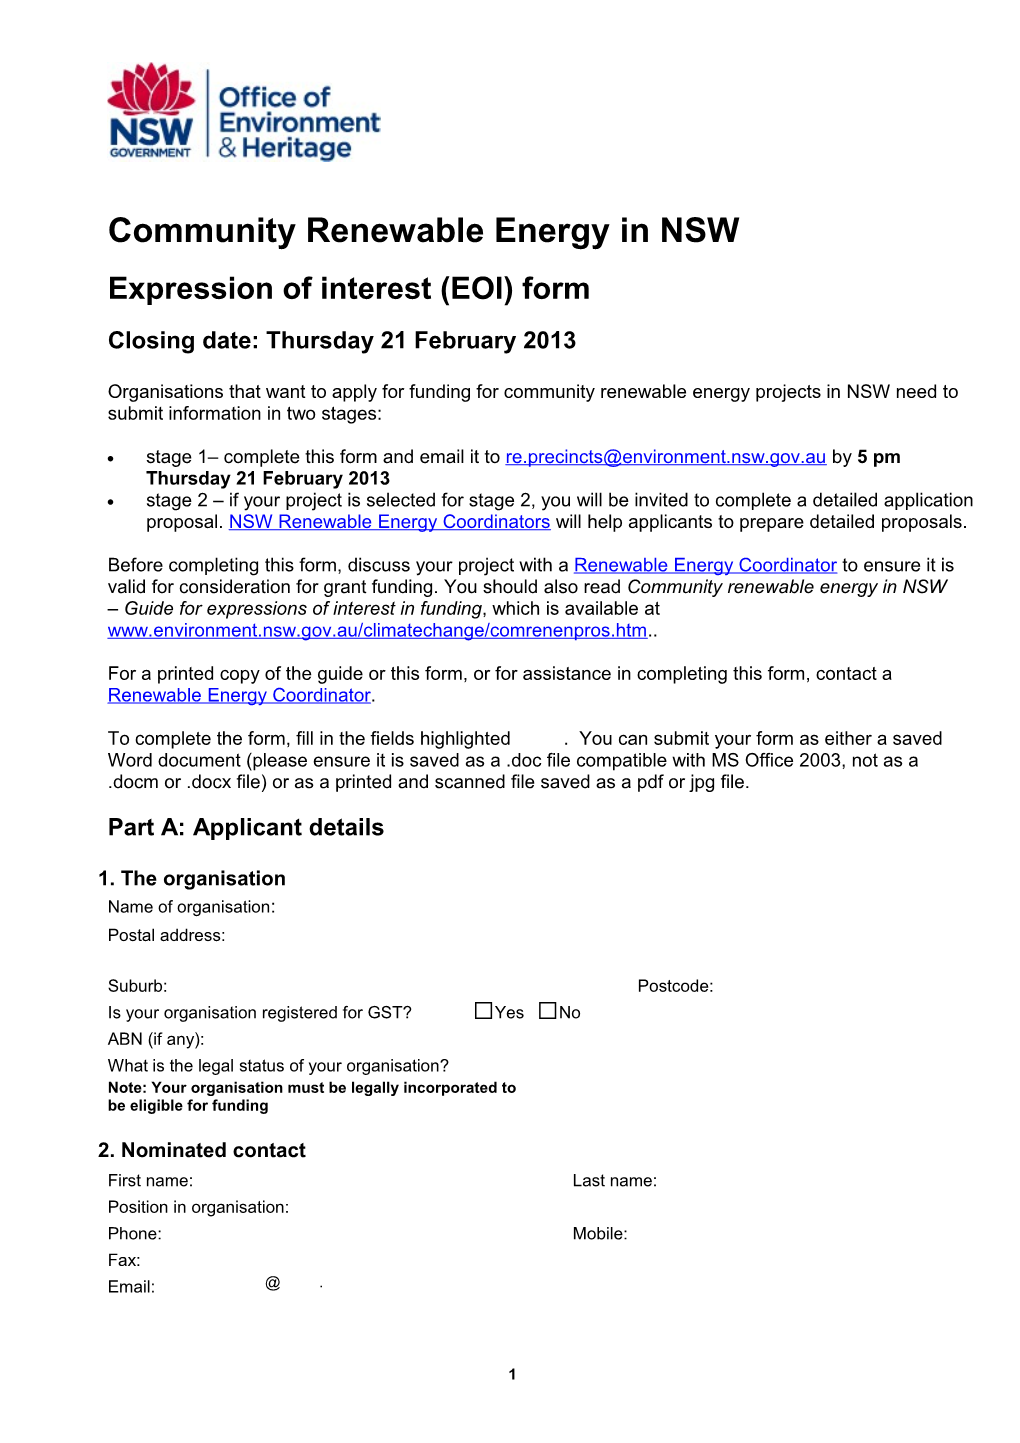 NSW Community Renewable Energy Grants Program